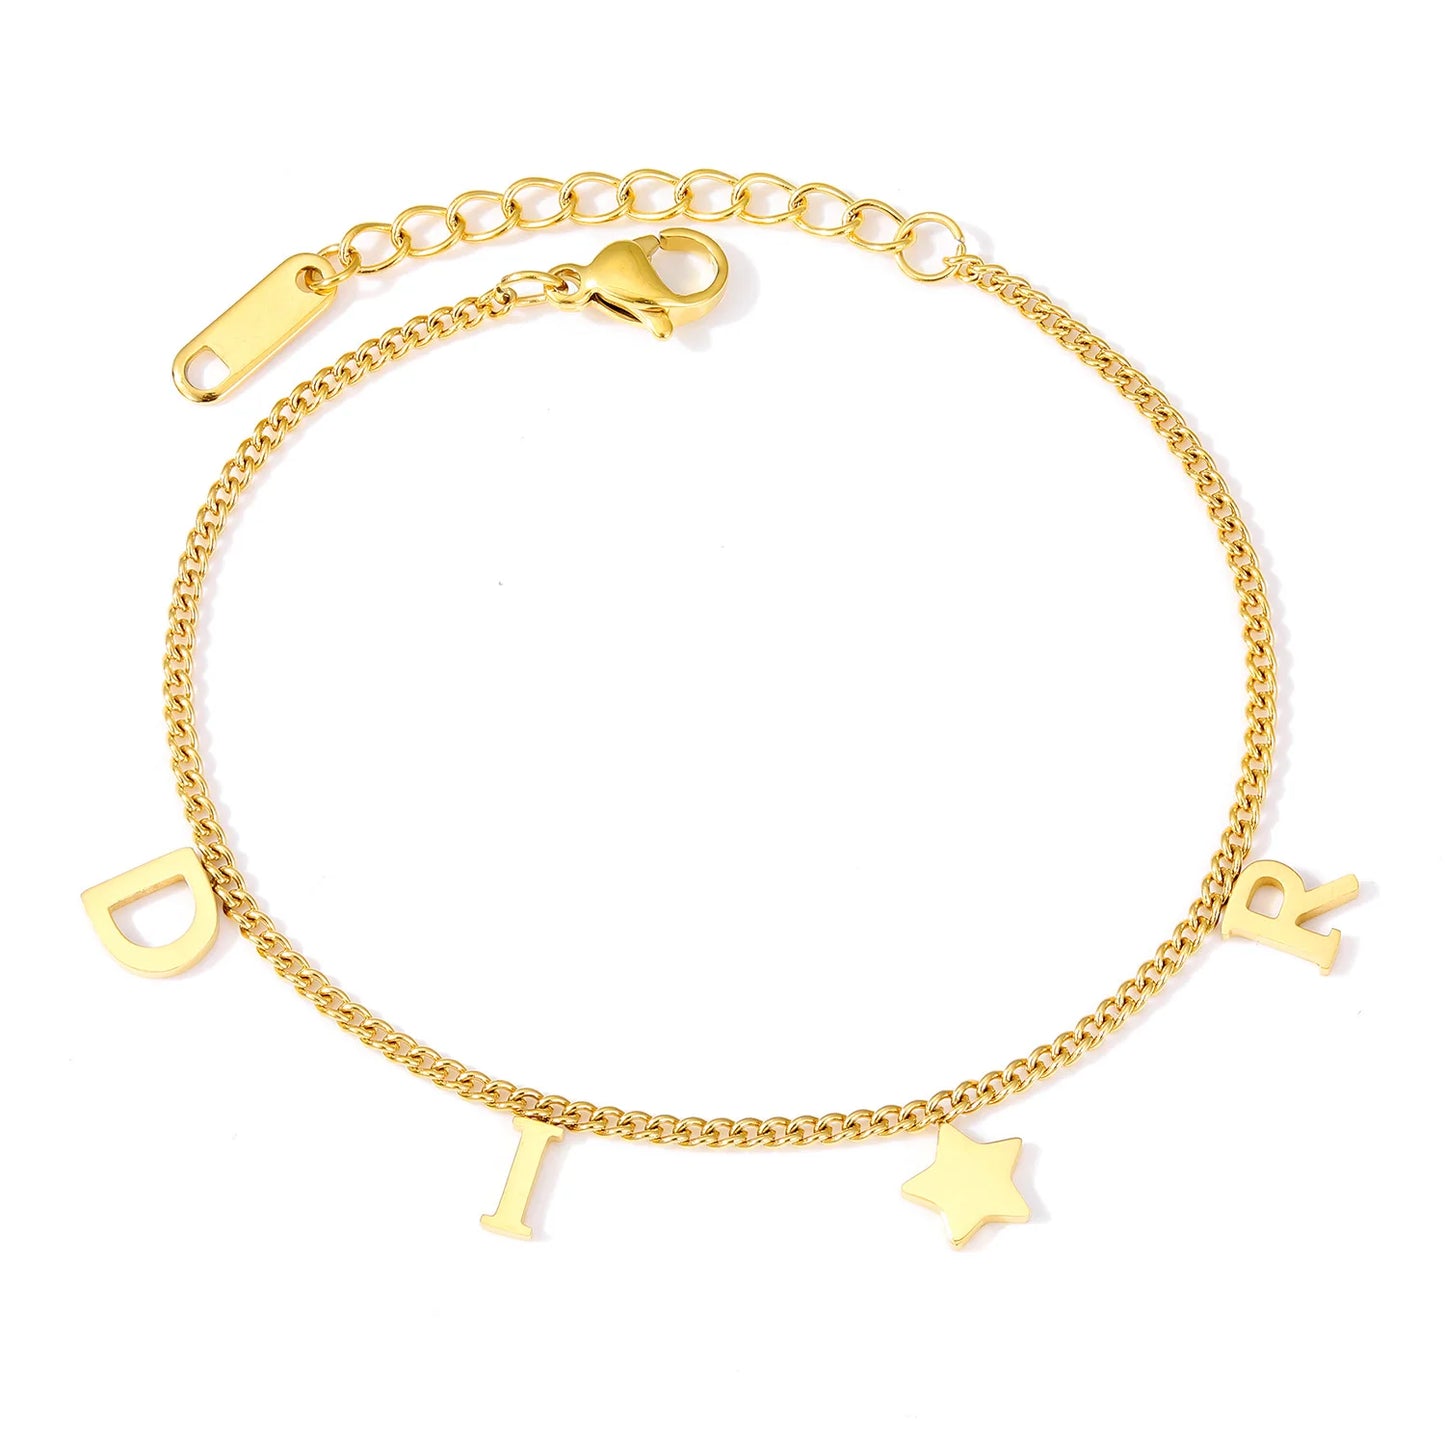 New Fashion Letter Star Pendant Bracelet Woman Simple Stainless Steel Bracelet Luxury Jewelry Accessories Gift